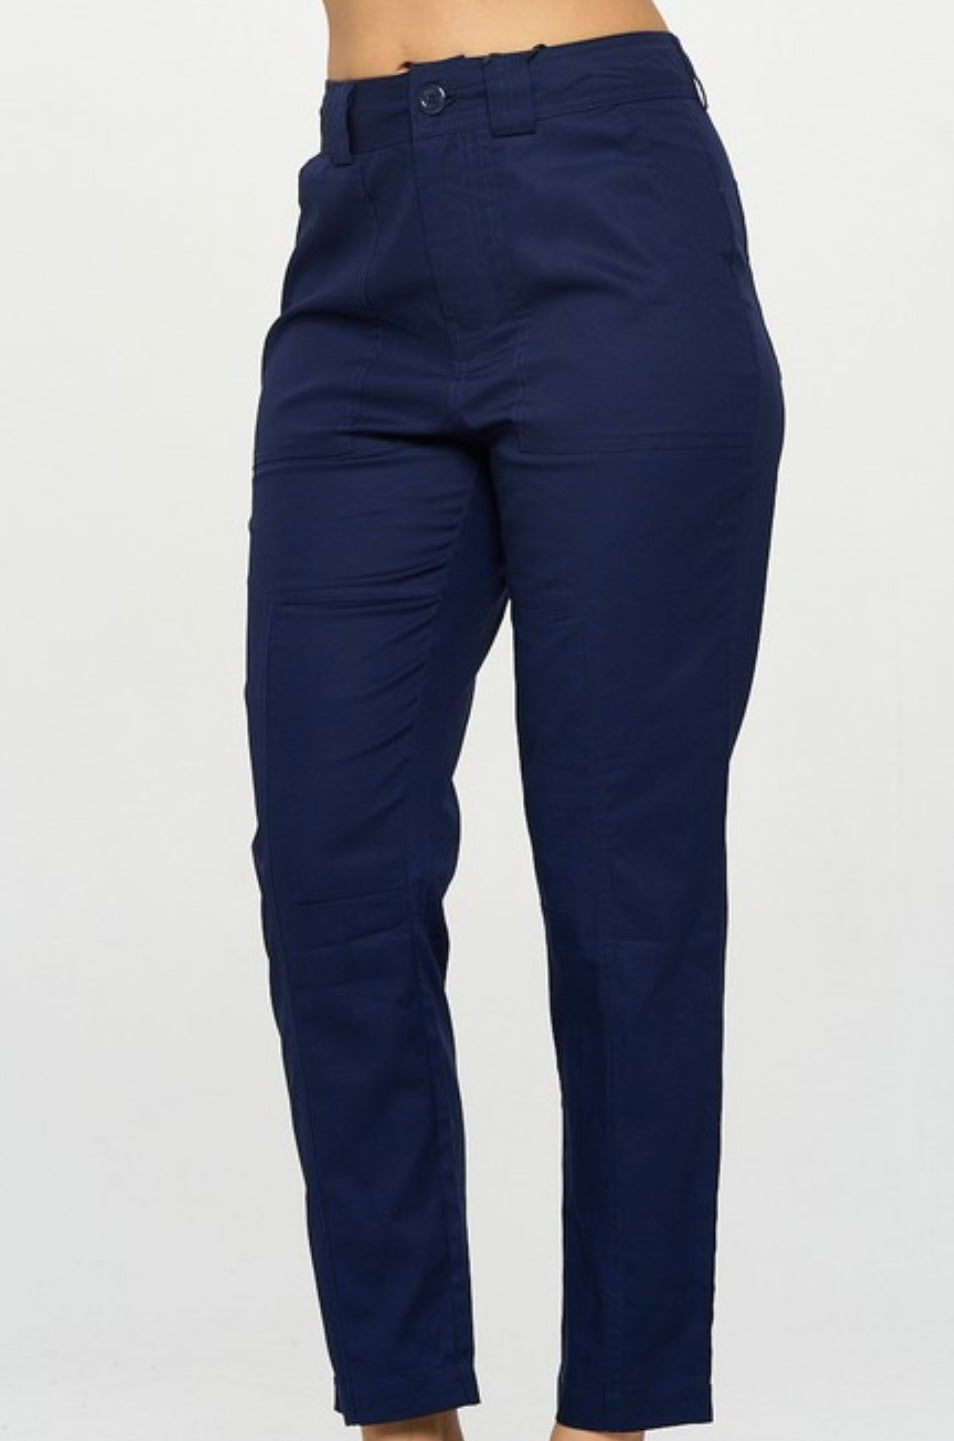 Nautica Trousers Pants- Navy